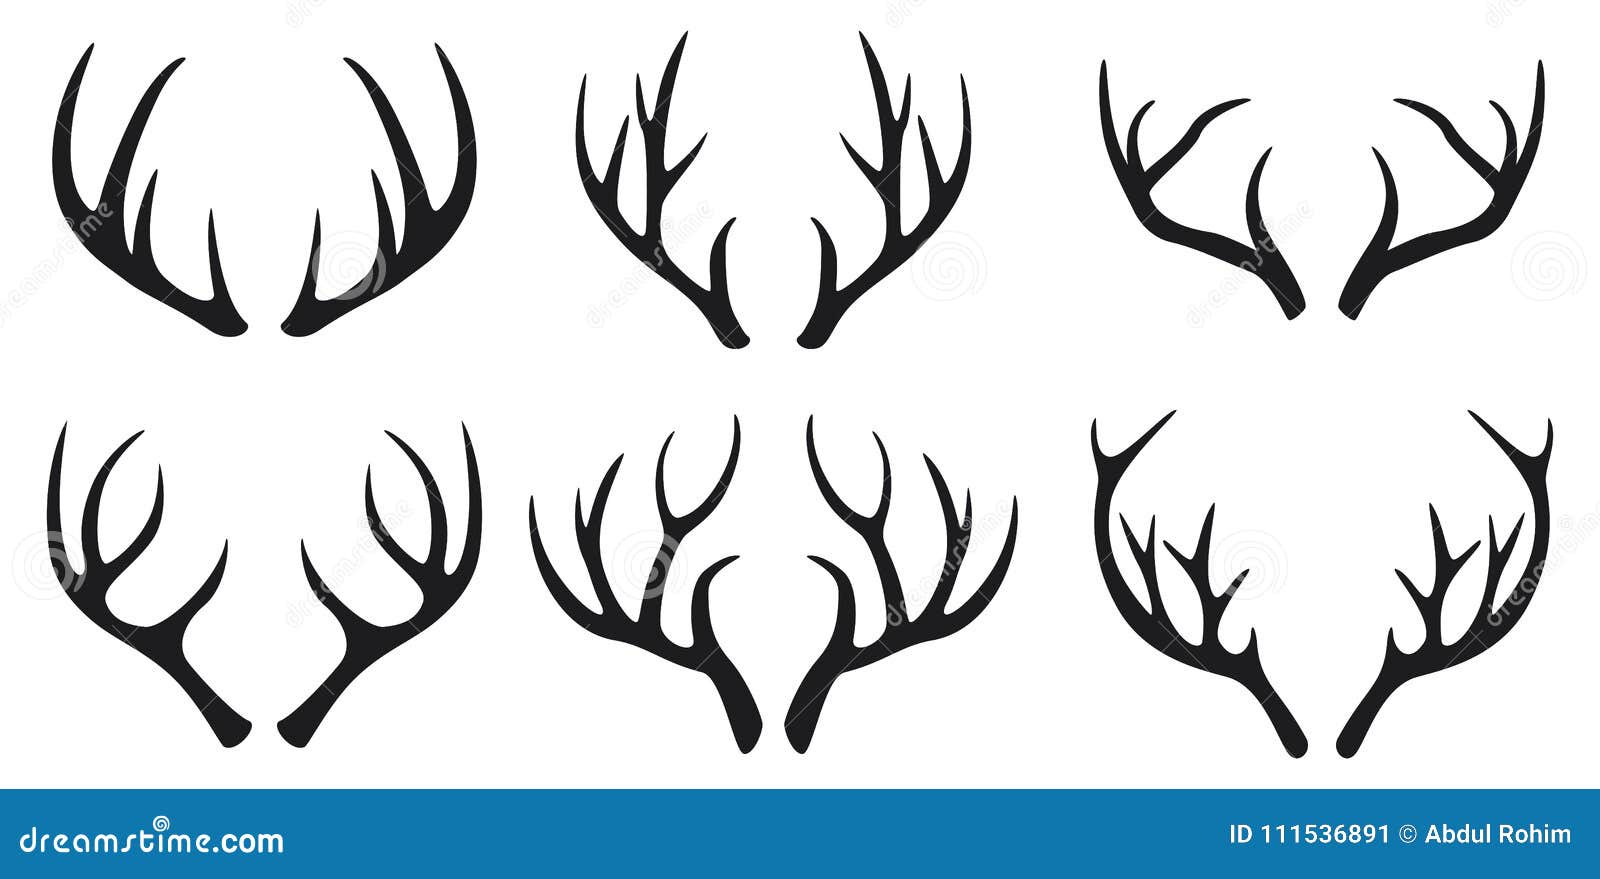 deer antlers black icons set on white background